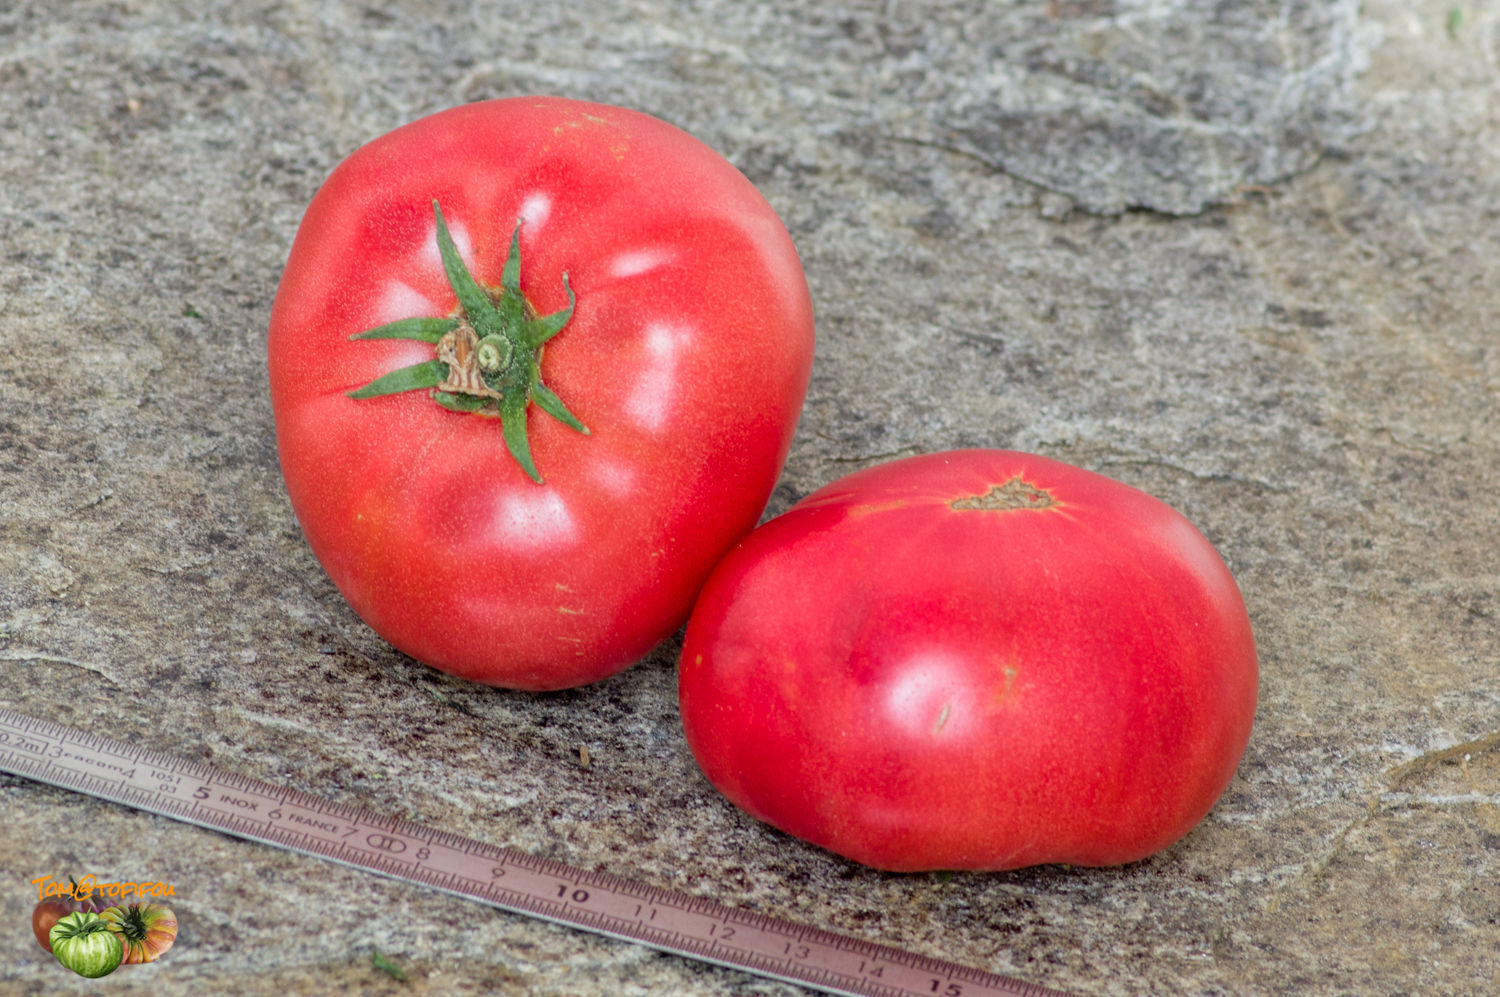 Brandywine Tomato (Sudduth's Strain) from Heritage Harvest Seed